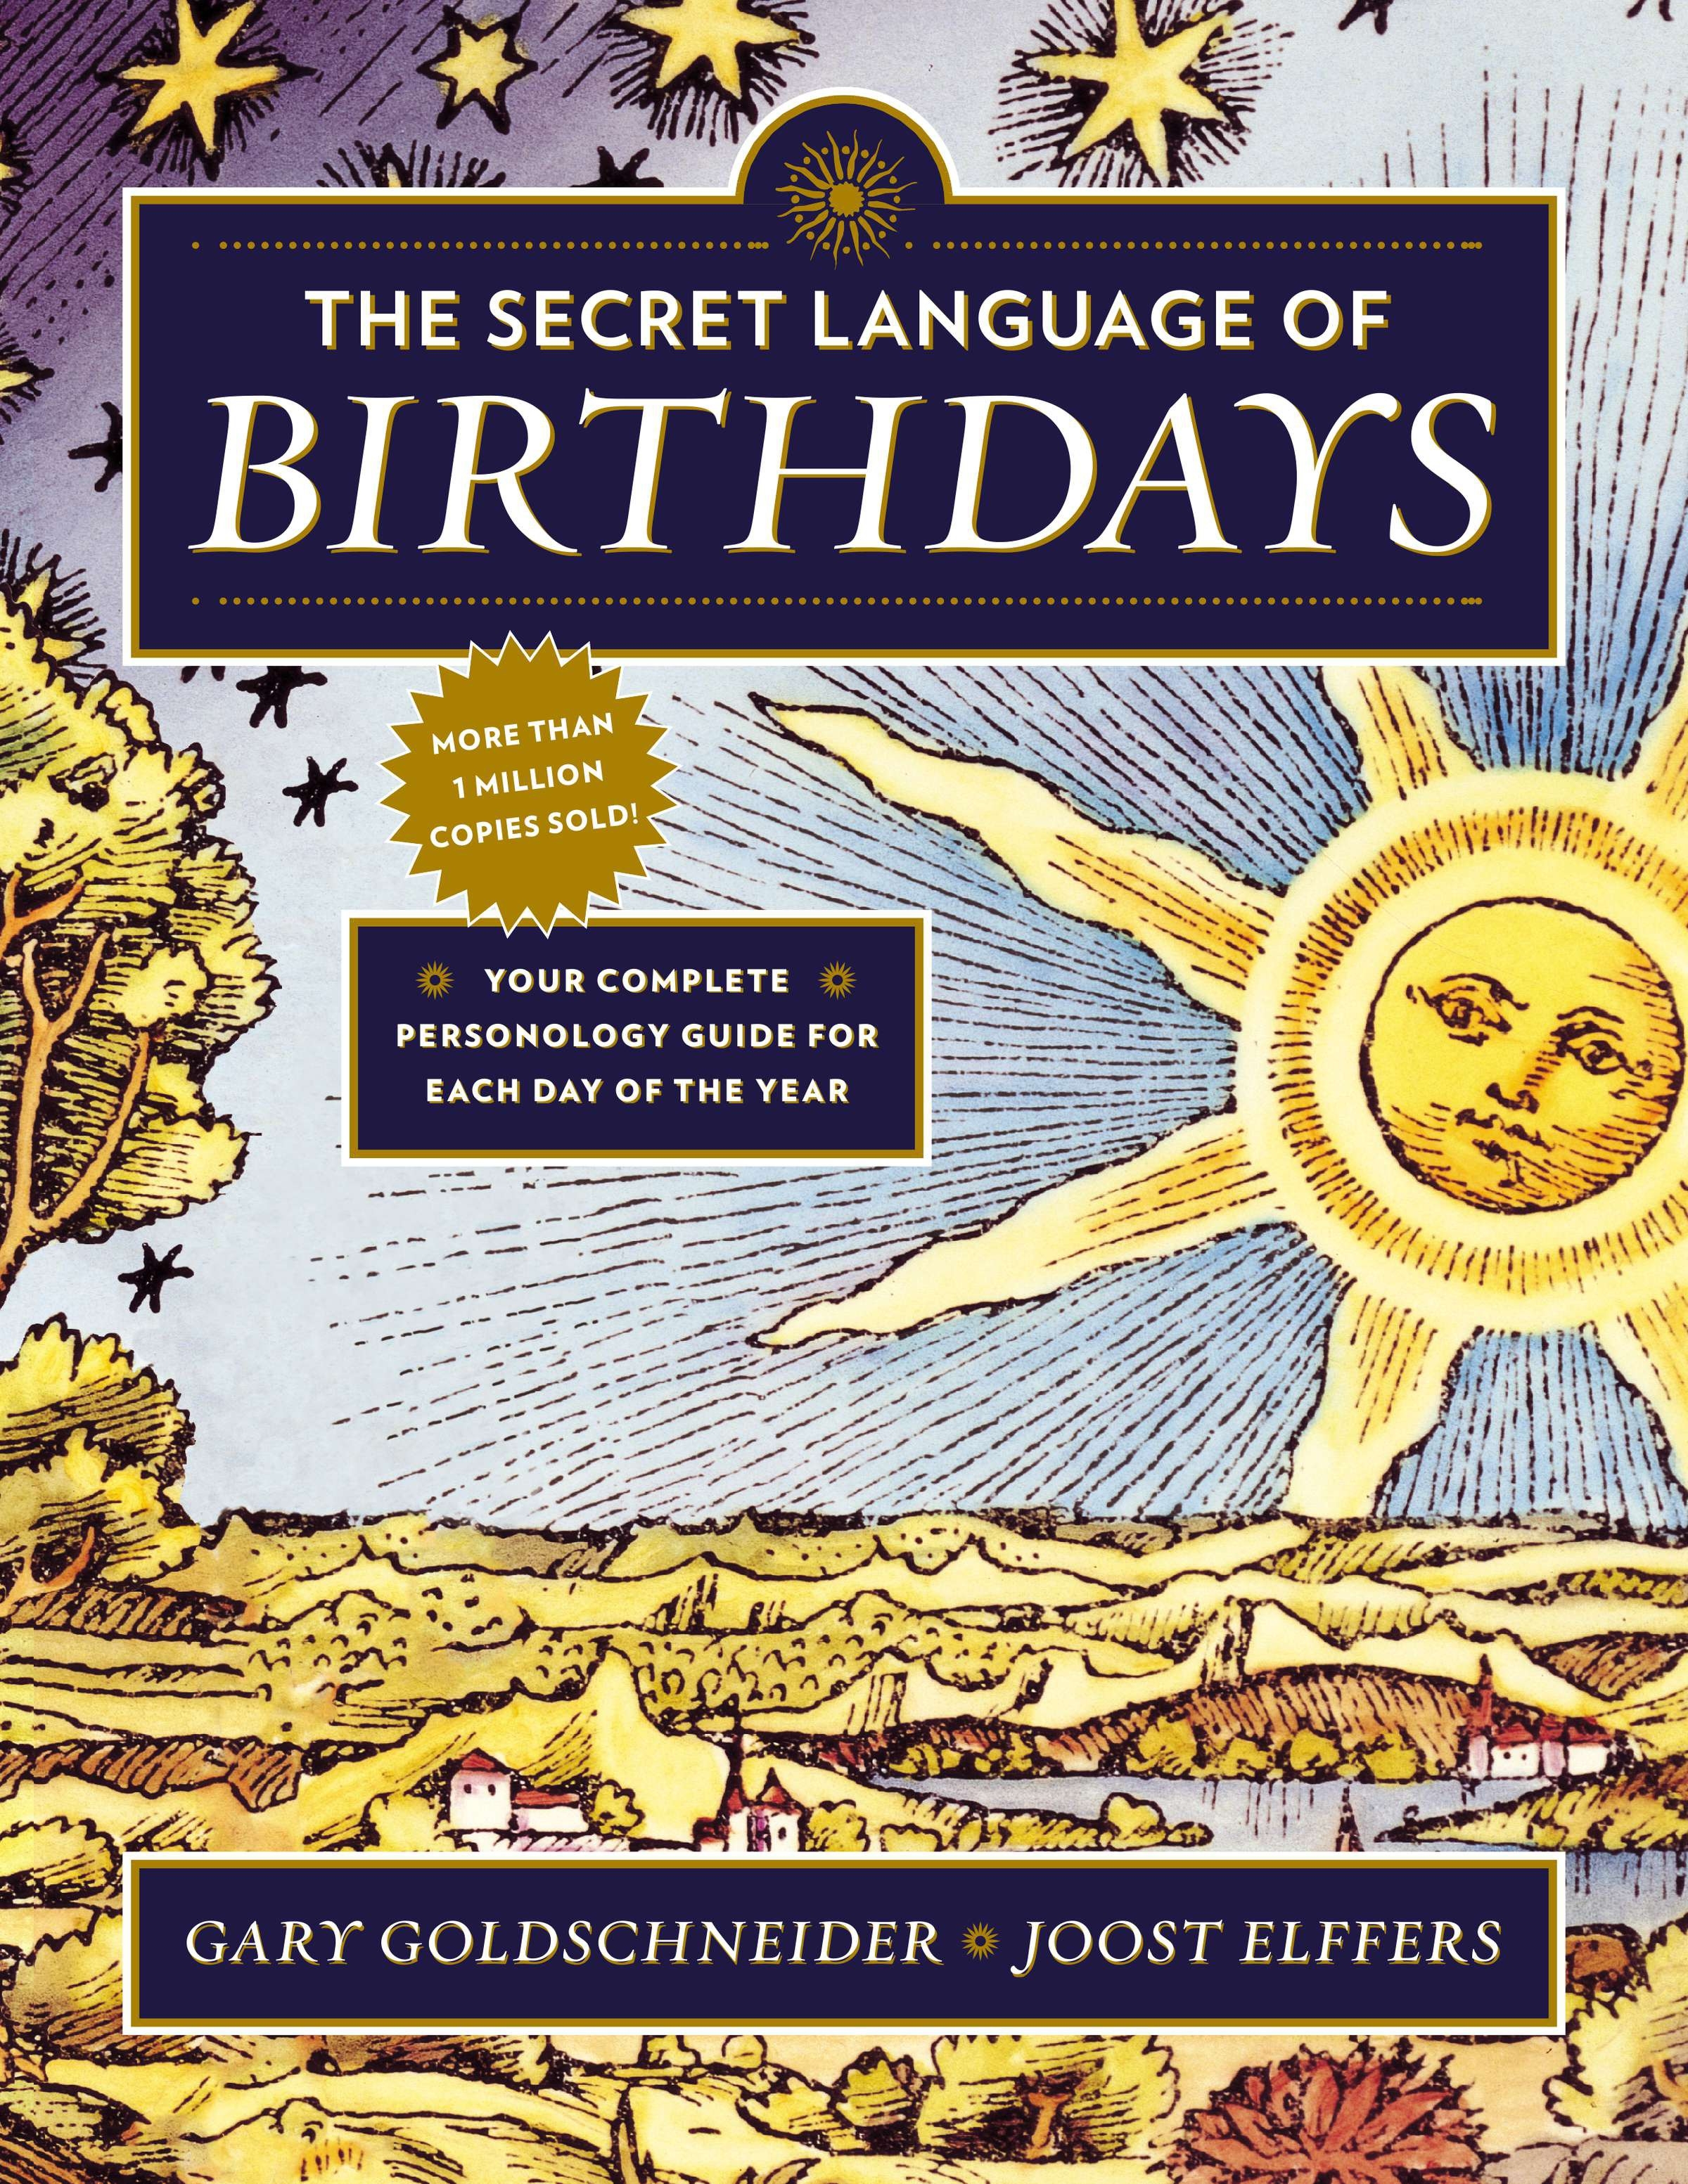 The Secret Language of Birthdays by Gary Goldschneider - Penguin Books Australia2400 x 3106